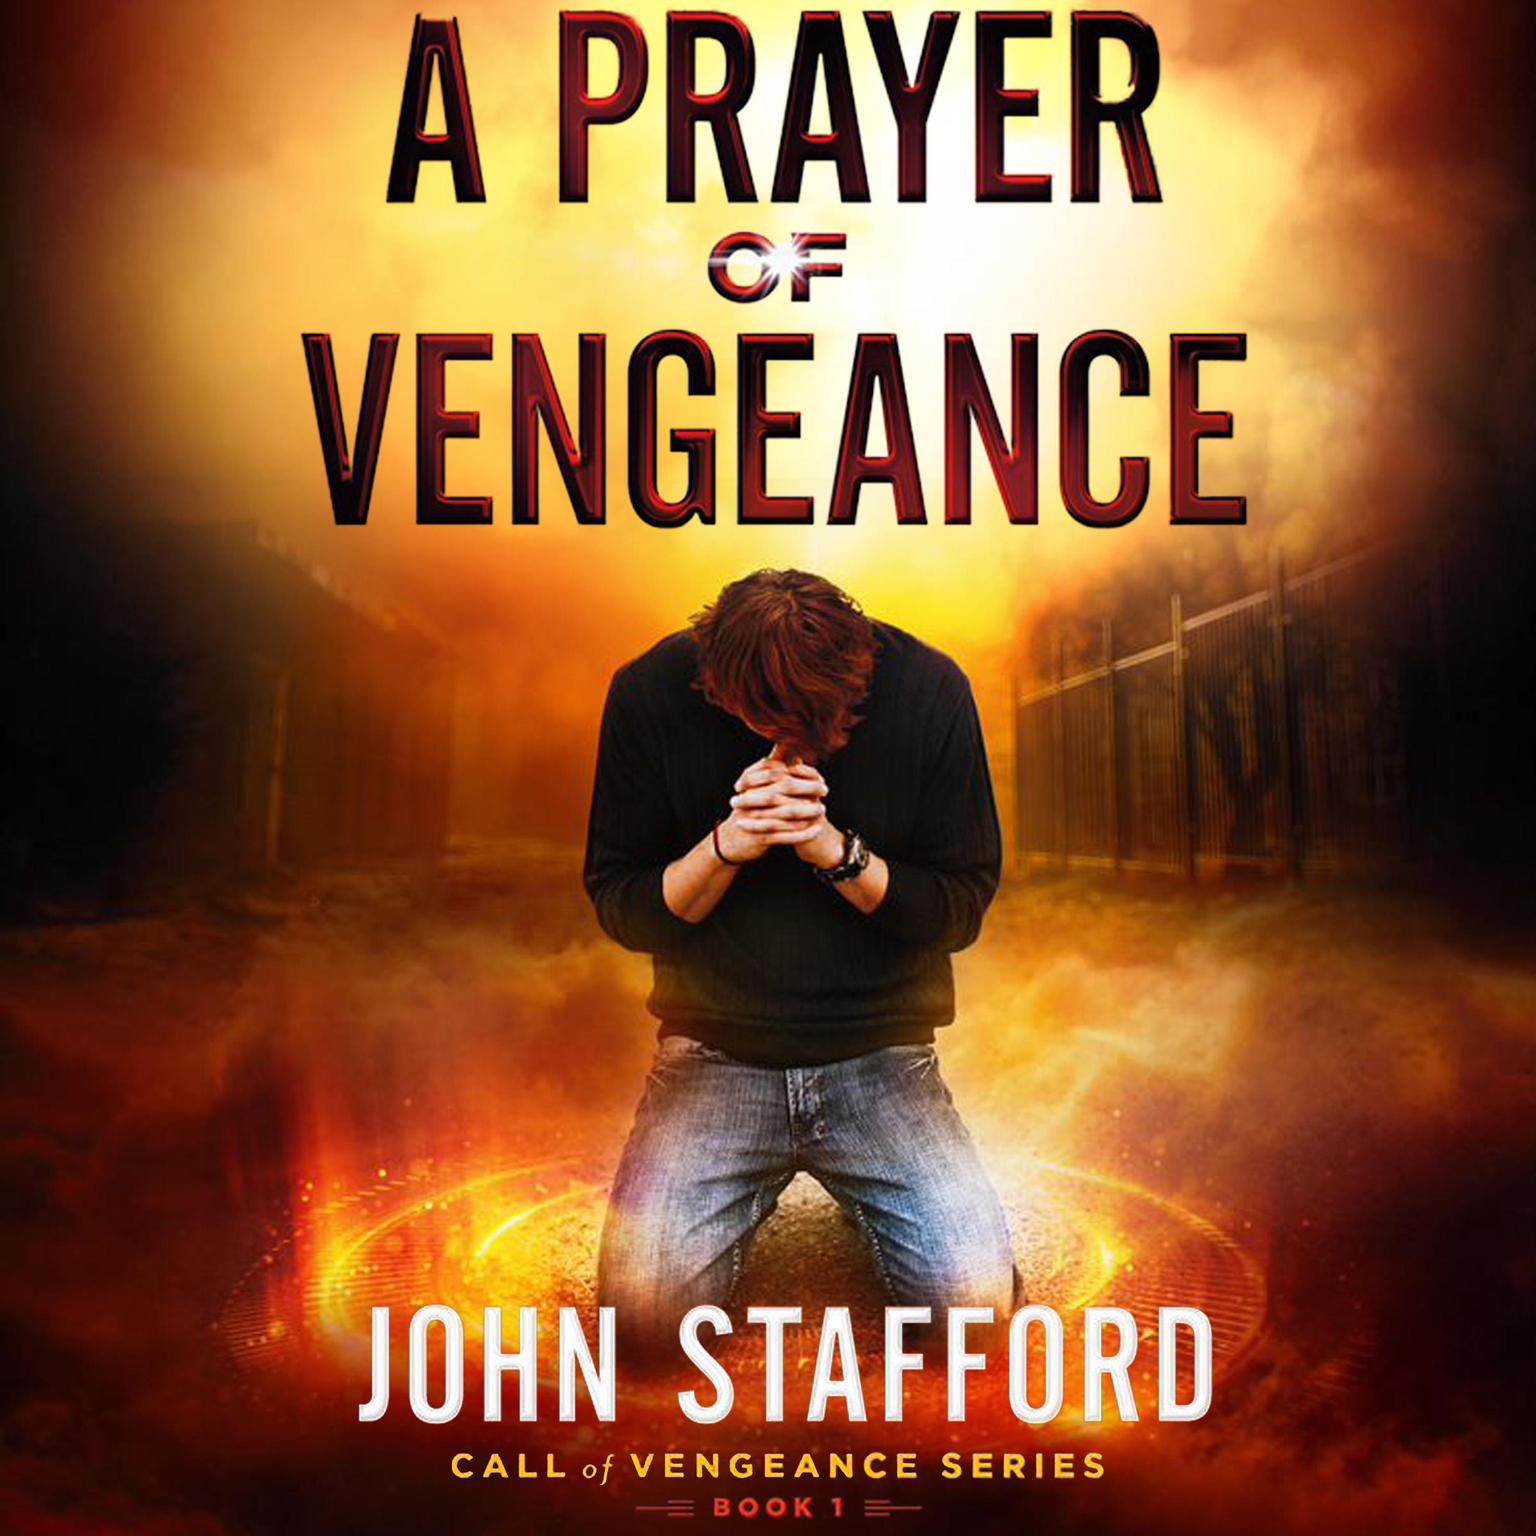 A Prayer of Vengeance: Call of Vengeance Series: Book 1 Audiobook, by John Stafford